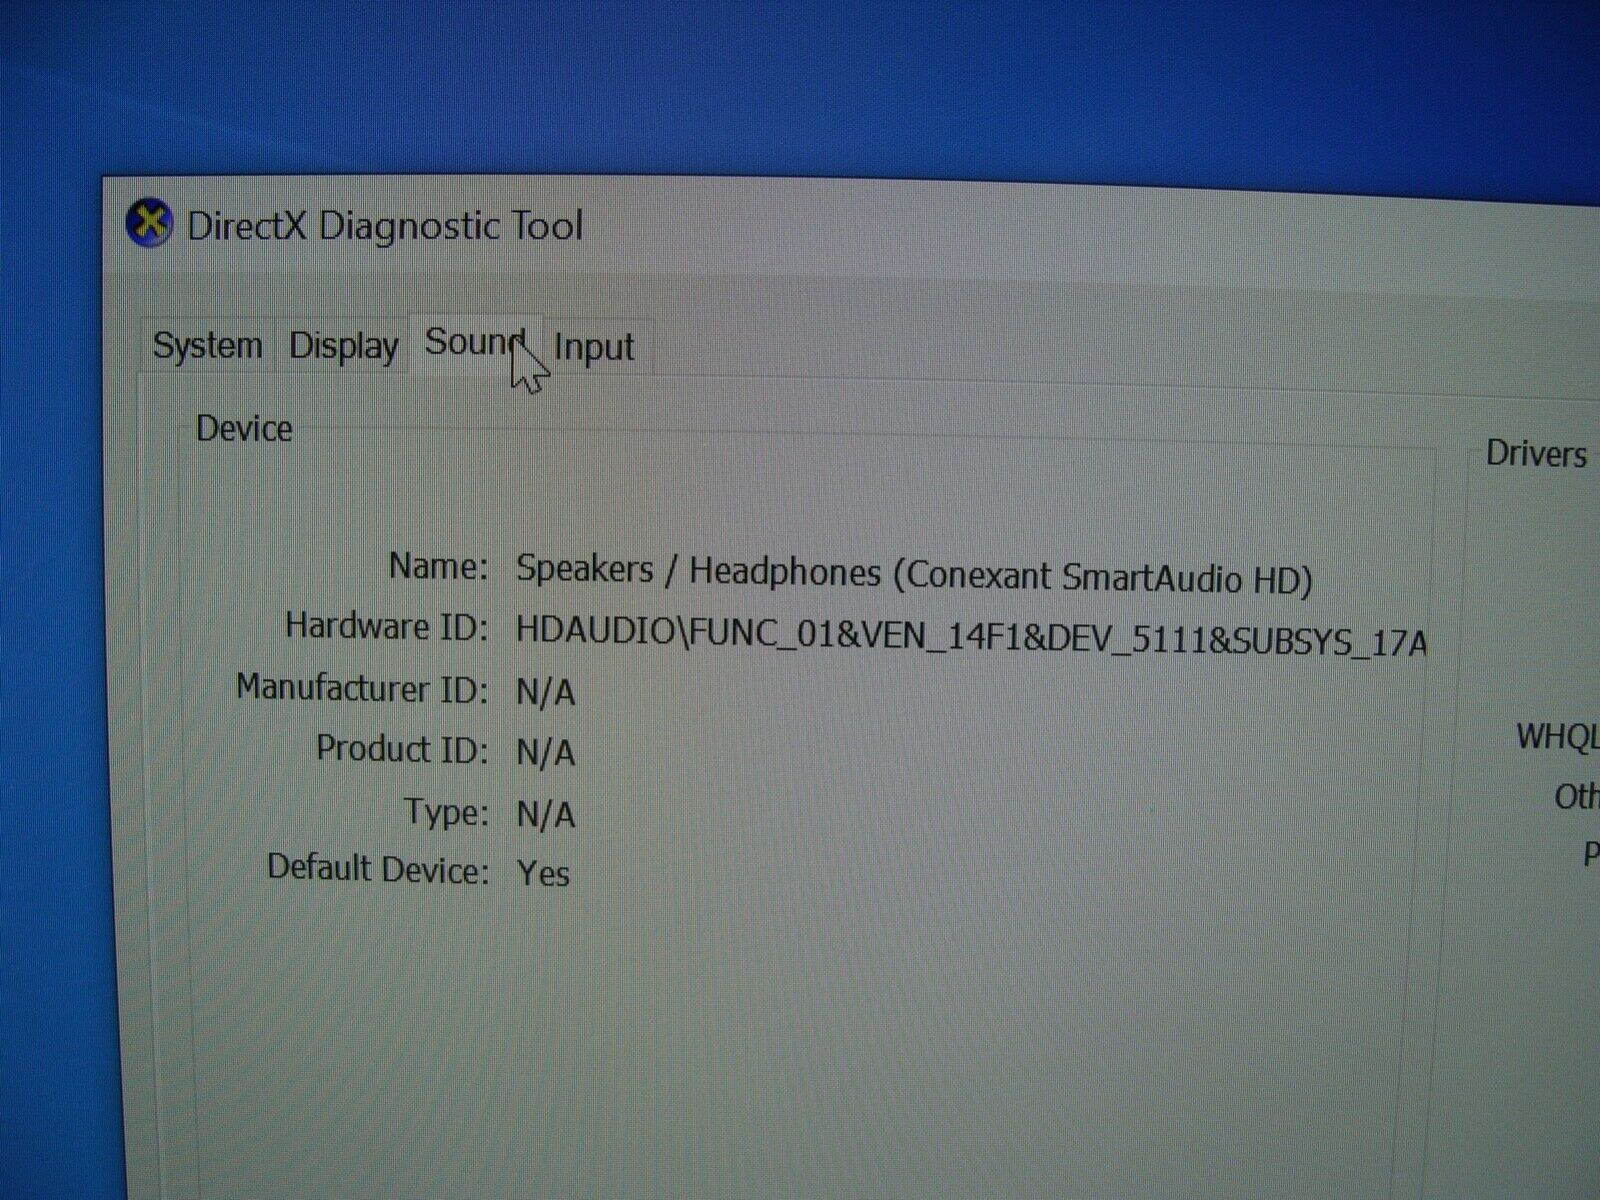 Clean Lenovo ThinkPad X1 Carbon Gen 4 Laptop i5-6200U 2.30GHz 8 GB Ram 256GB SSD